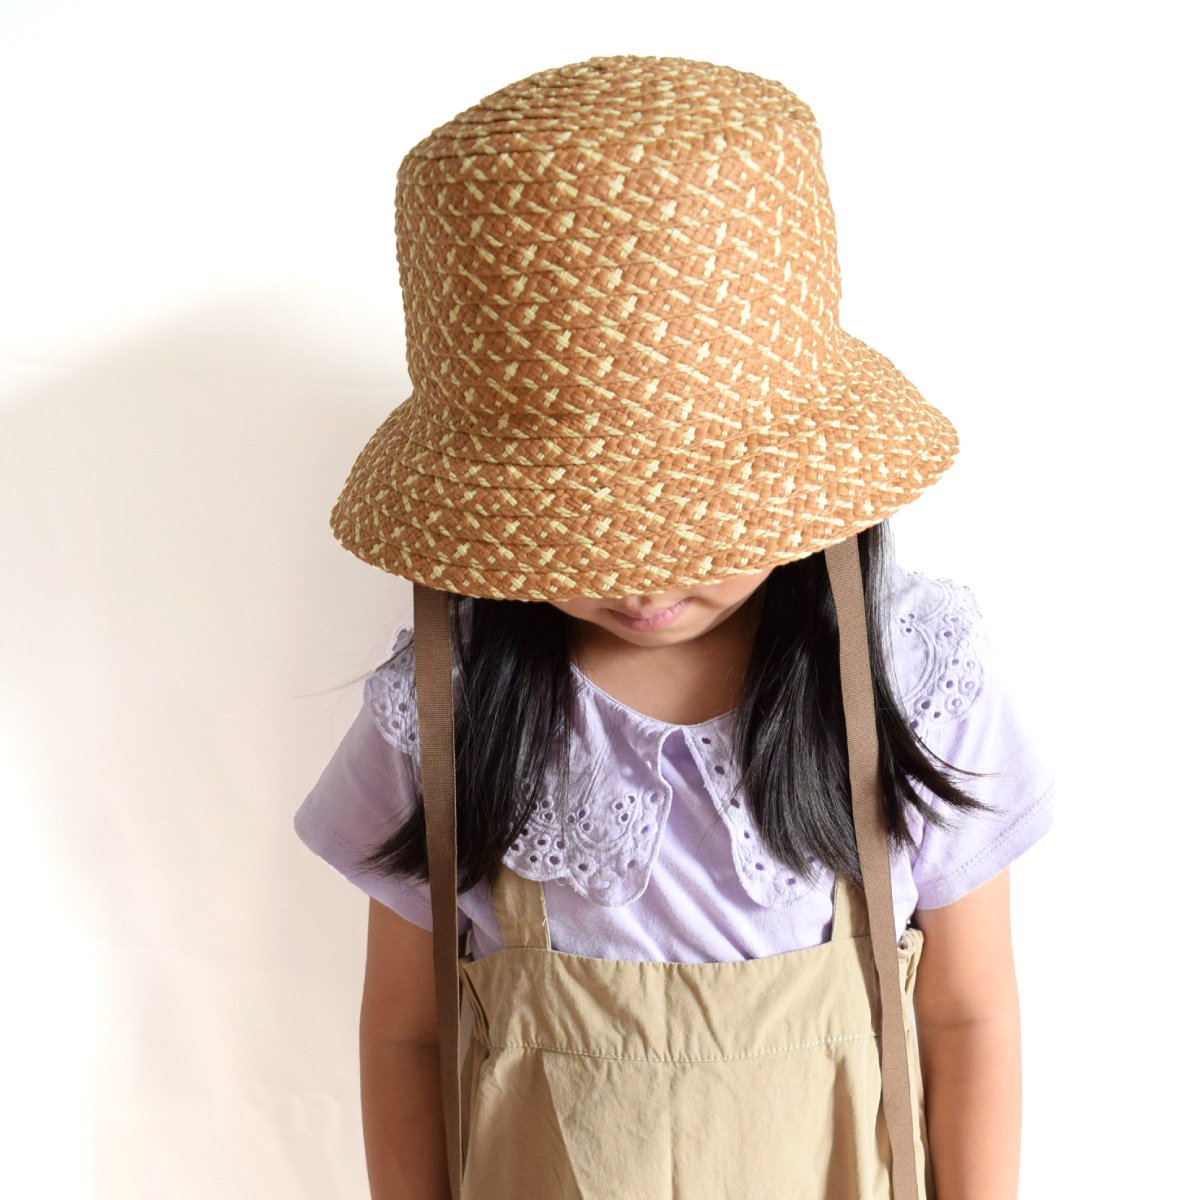  【KIDS】Kids Croched Hat